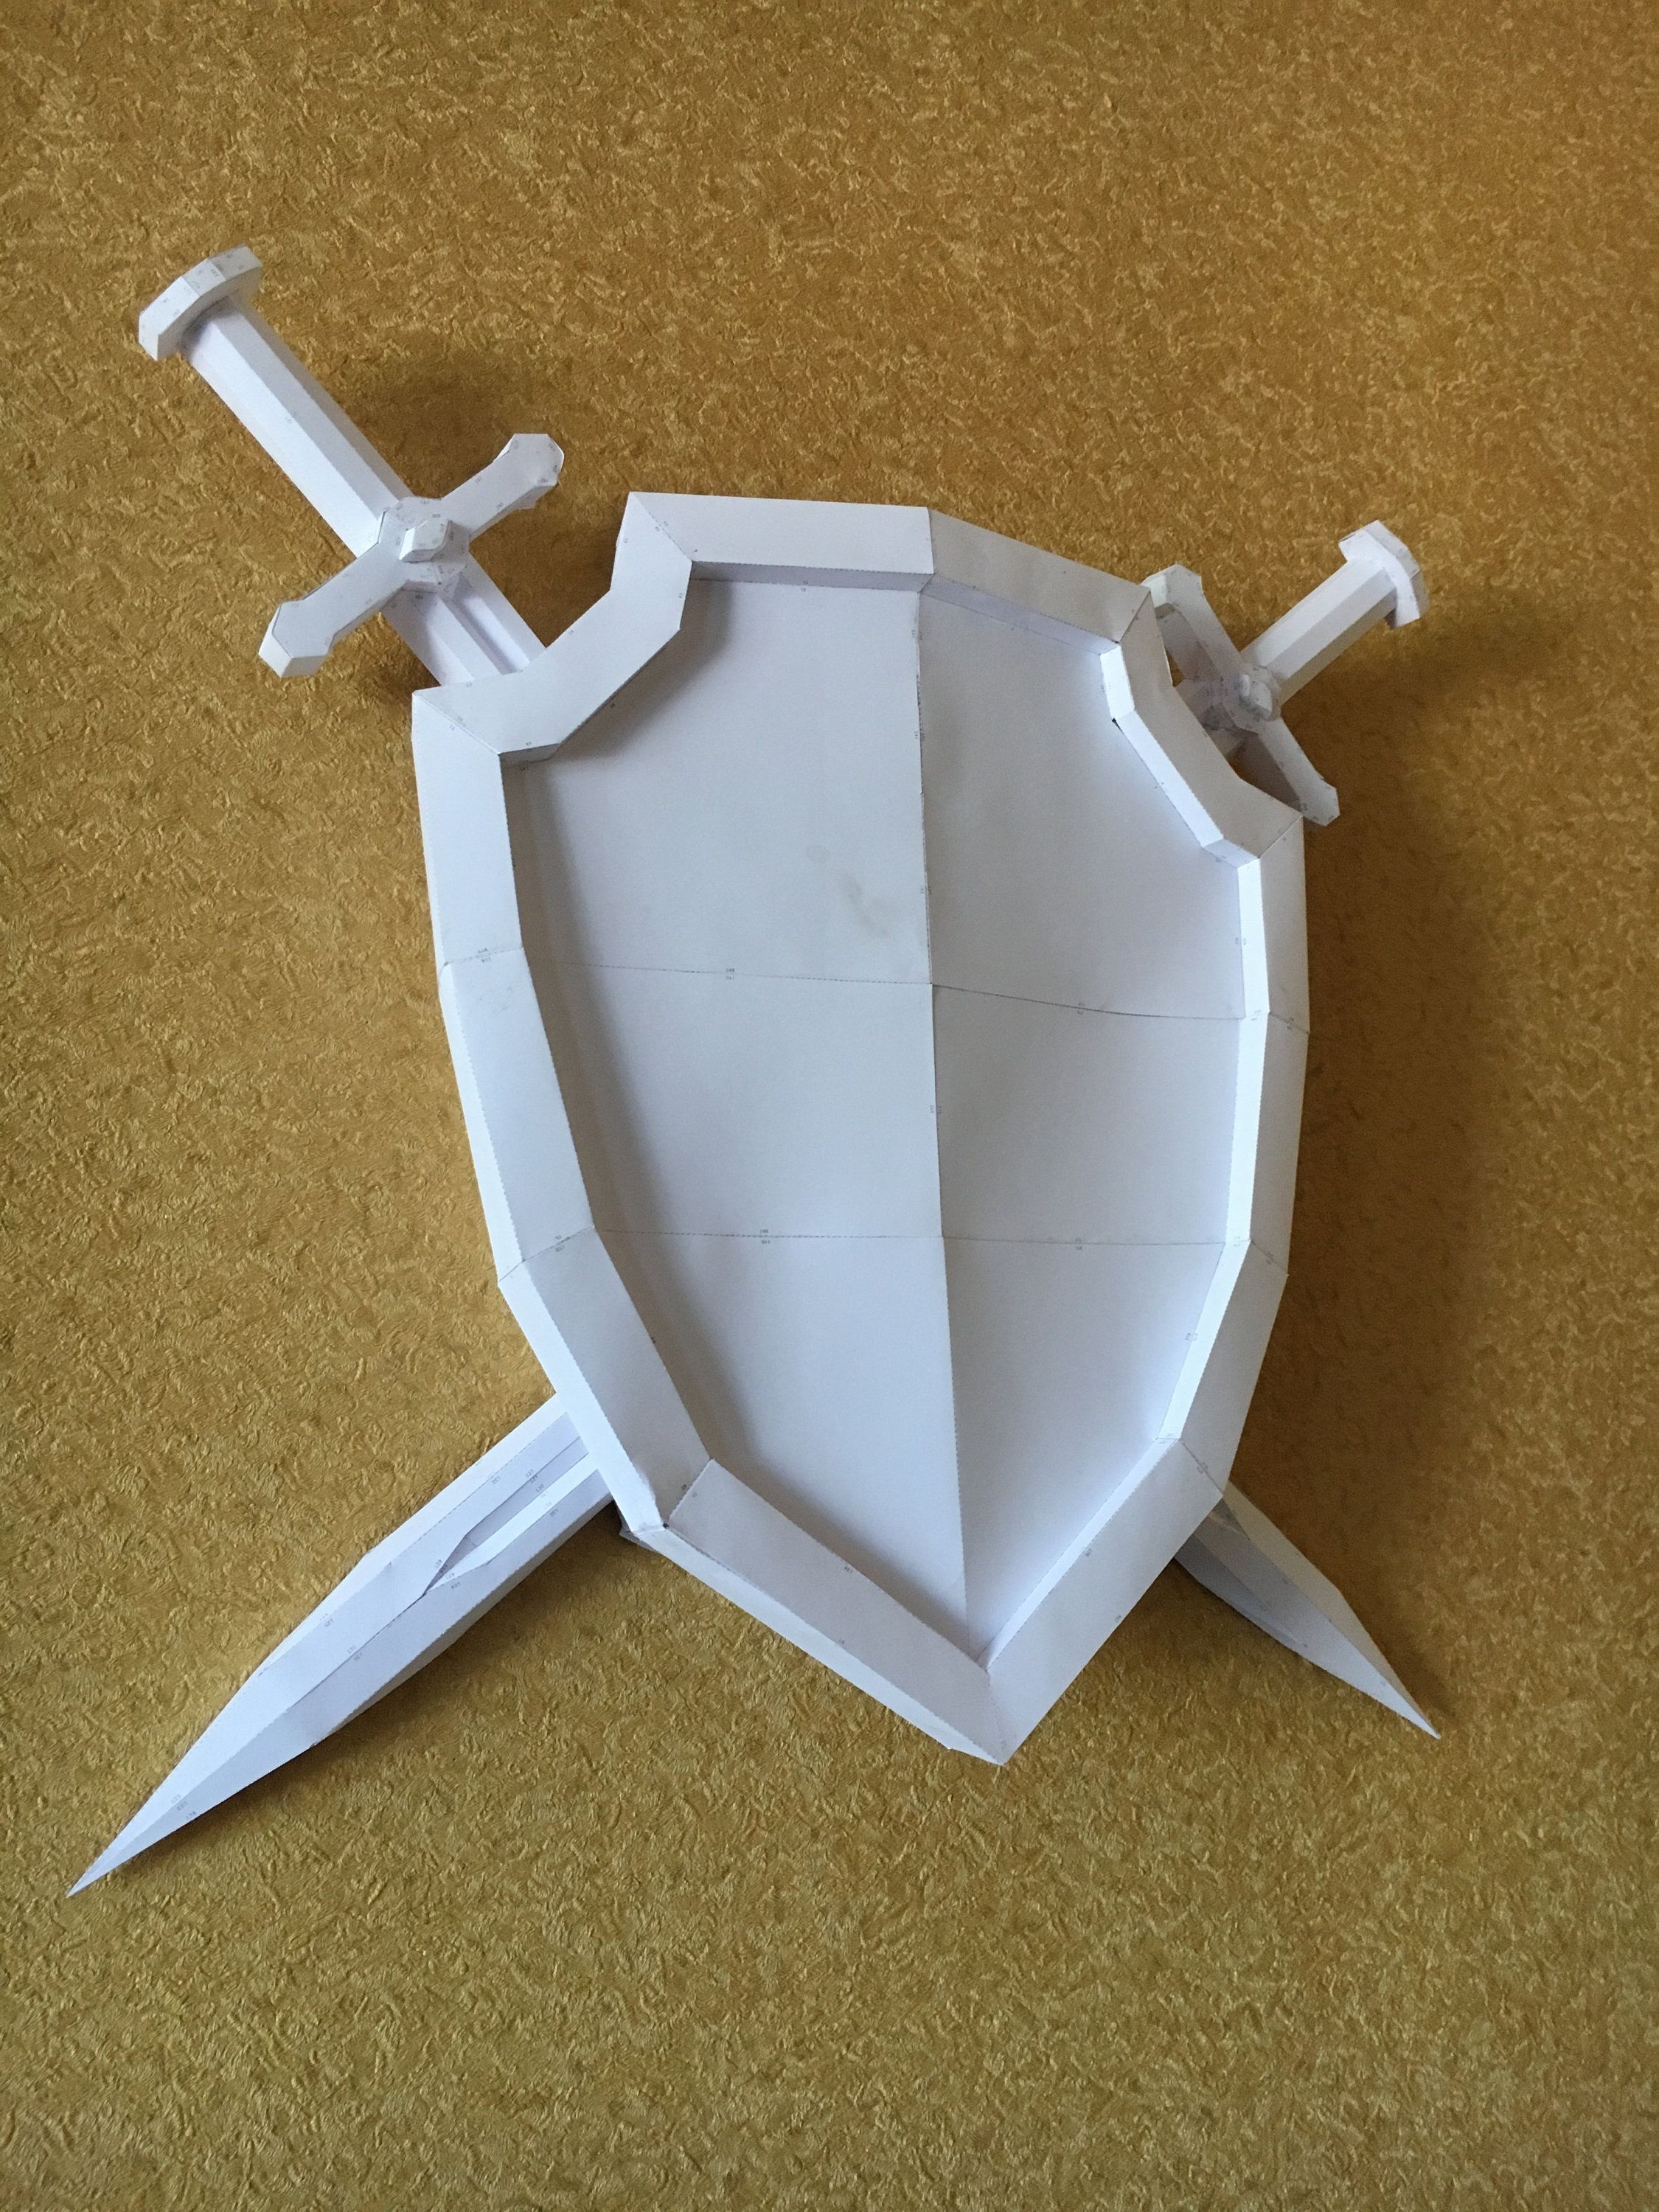 3d Model to Papercraft Sword Shield Diy Papercraft Model ÐÑÐ¼Ð°Ð¶Ð½ÑÐµ Ð¸Ð·Ð´ÐµÐ Ð¸Ñ